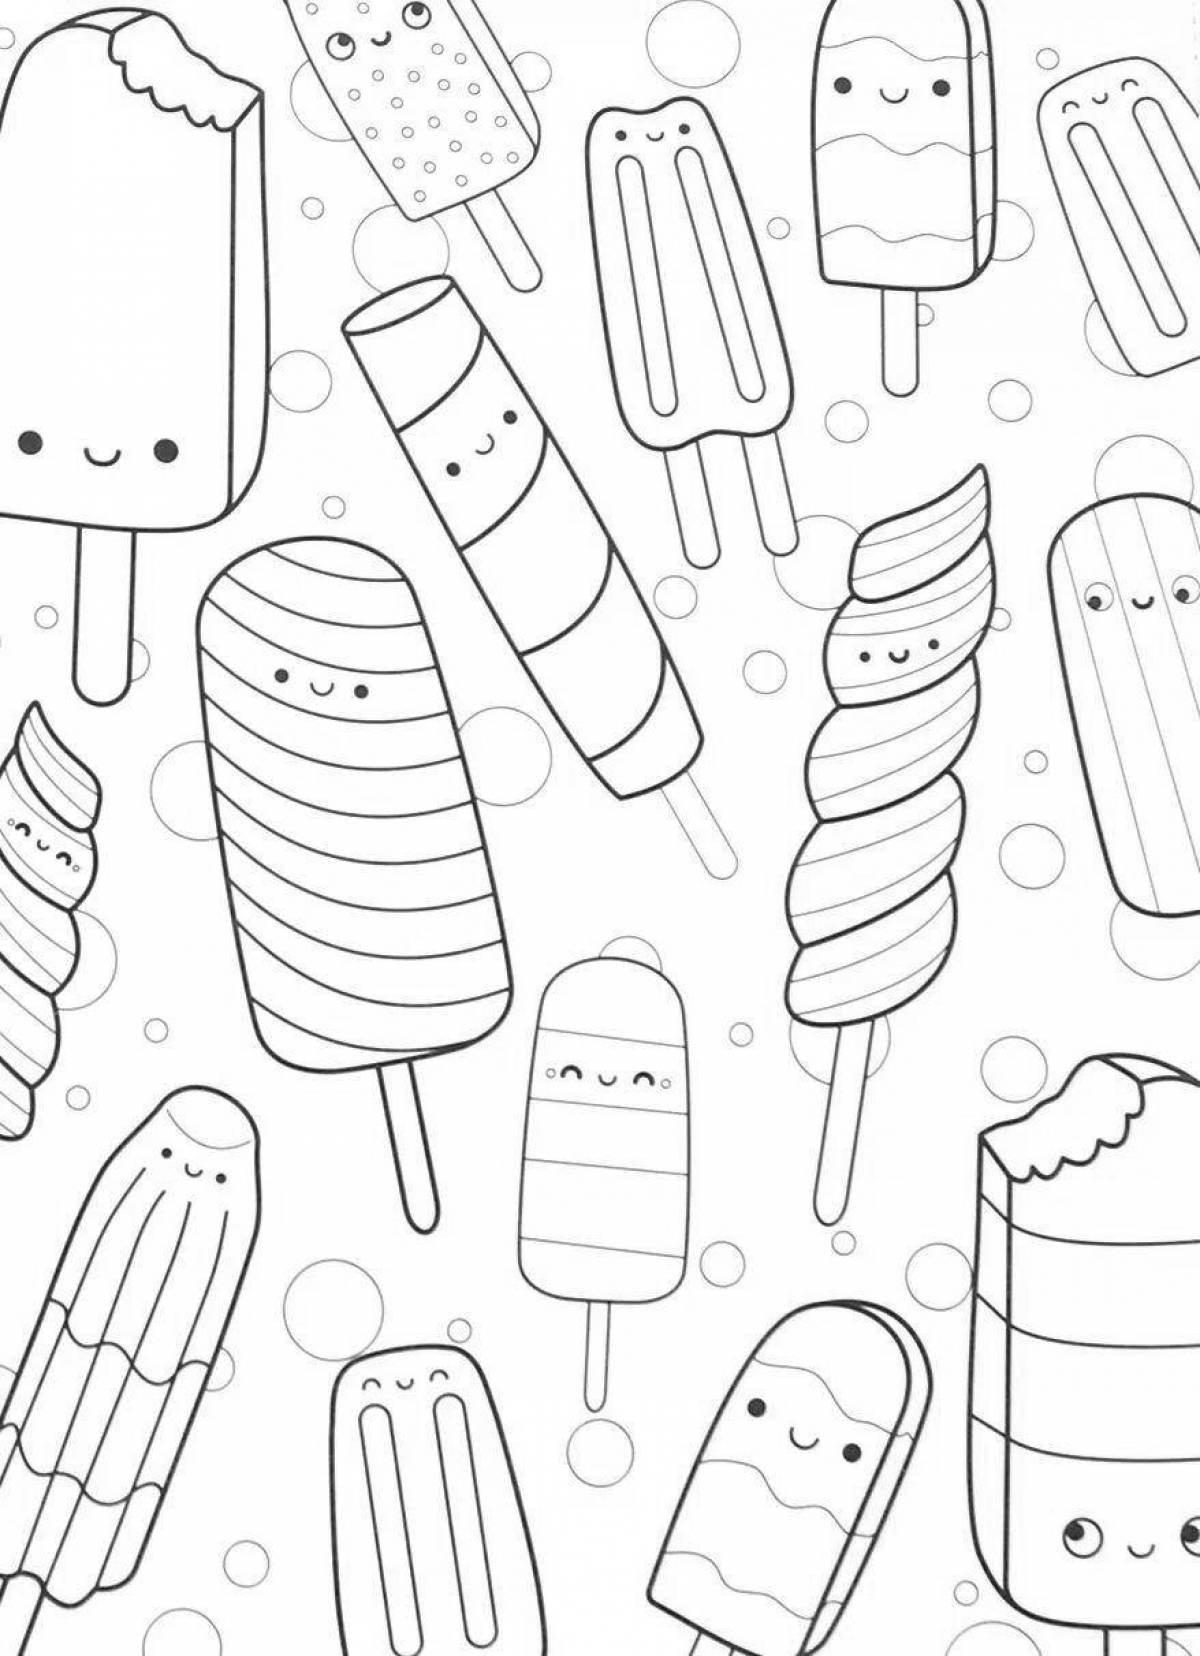 Playful kawaii food coloring page